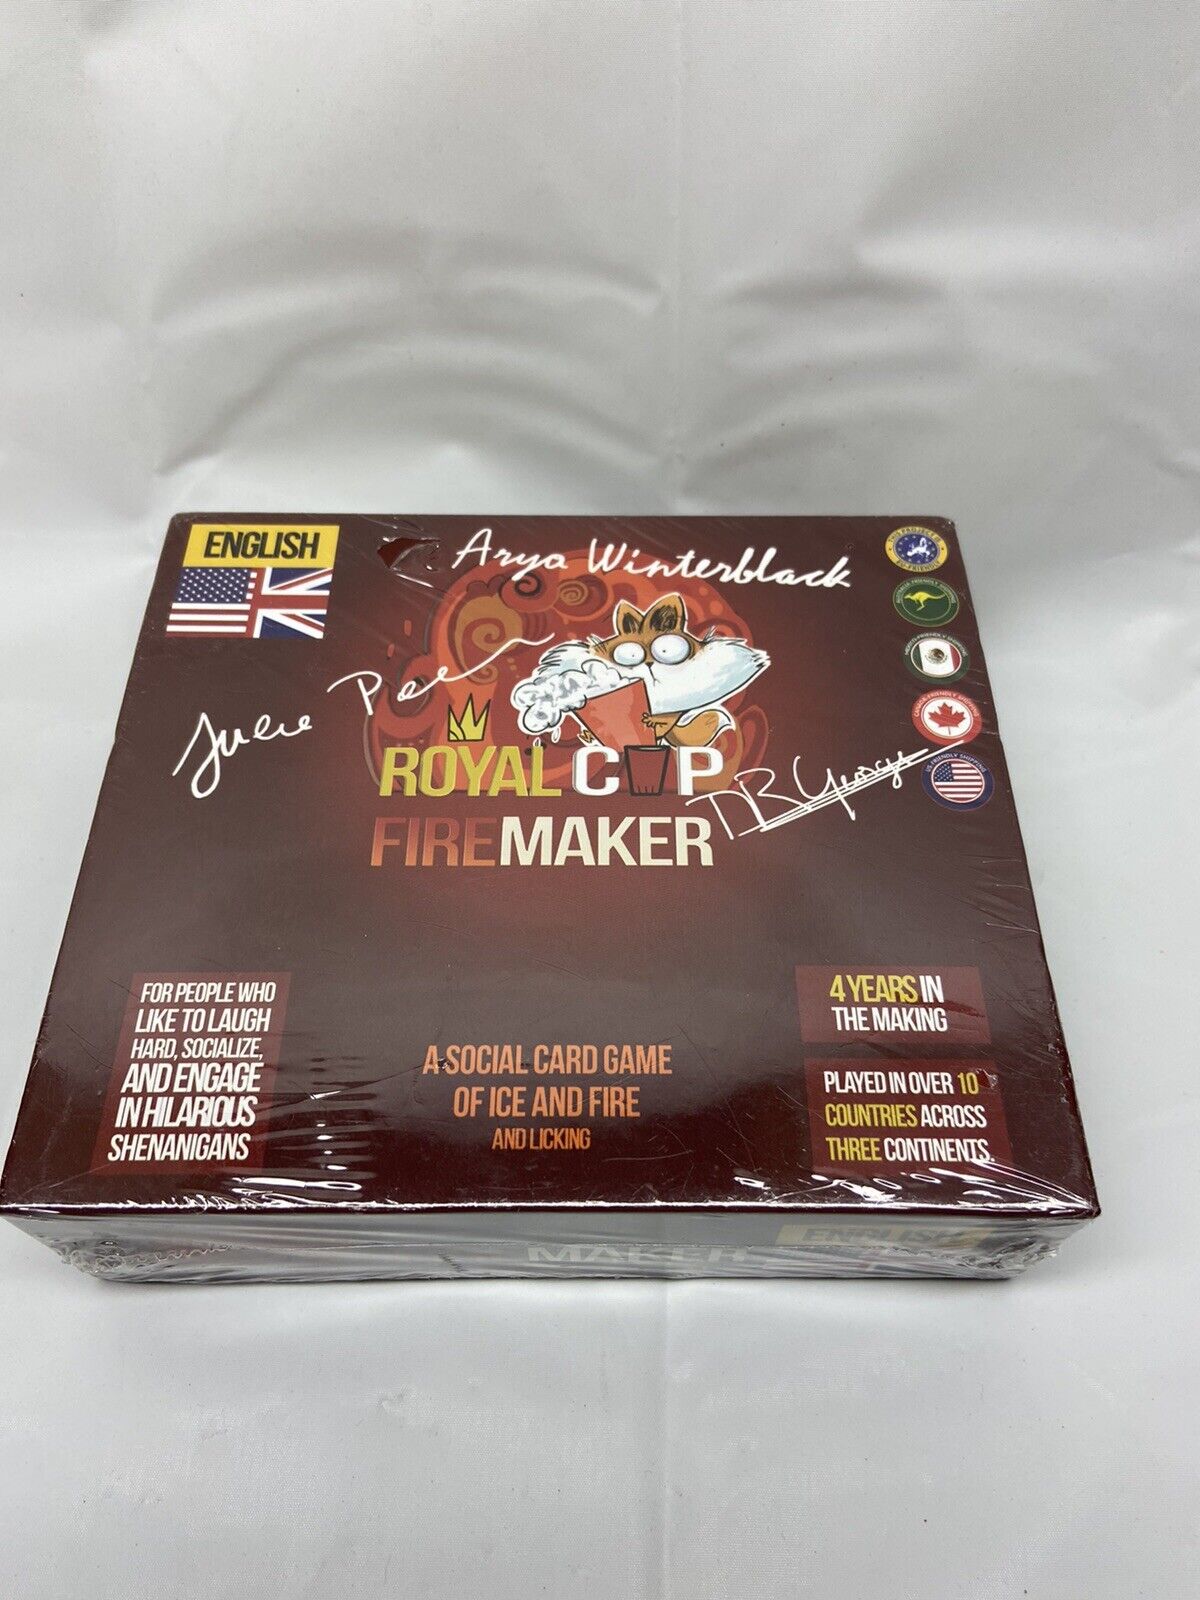 Royal cup Limited Super intense SALE time sale Firemaker game